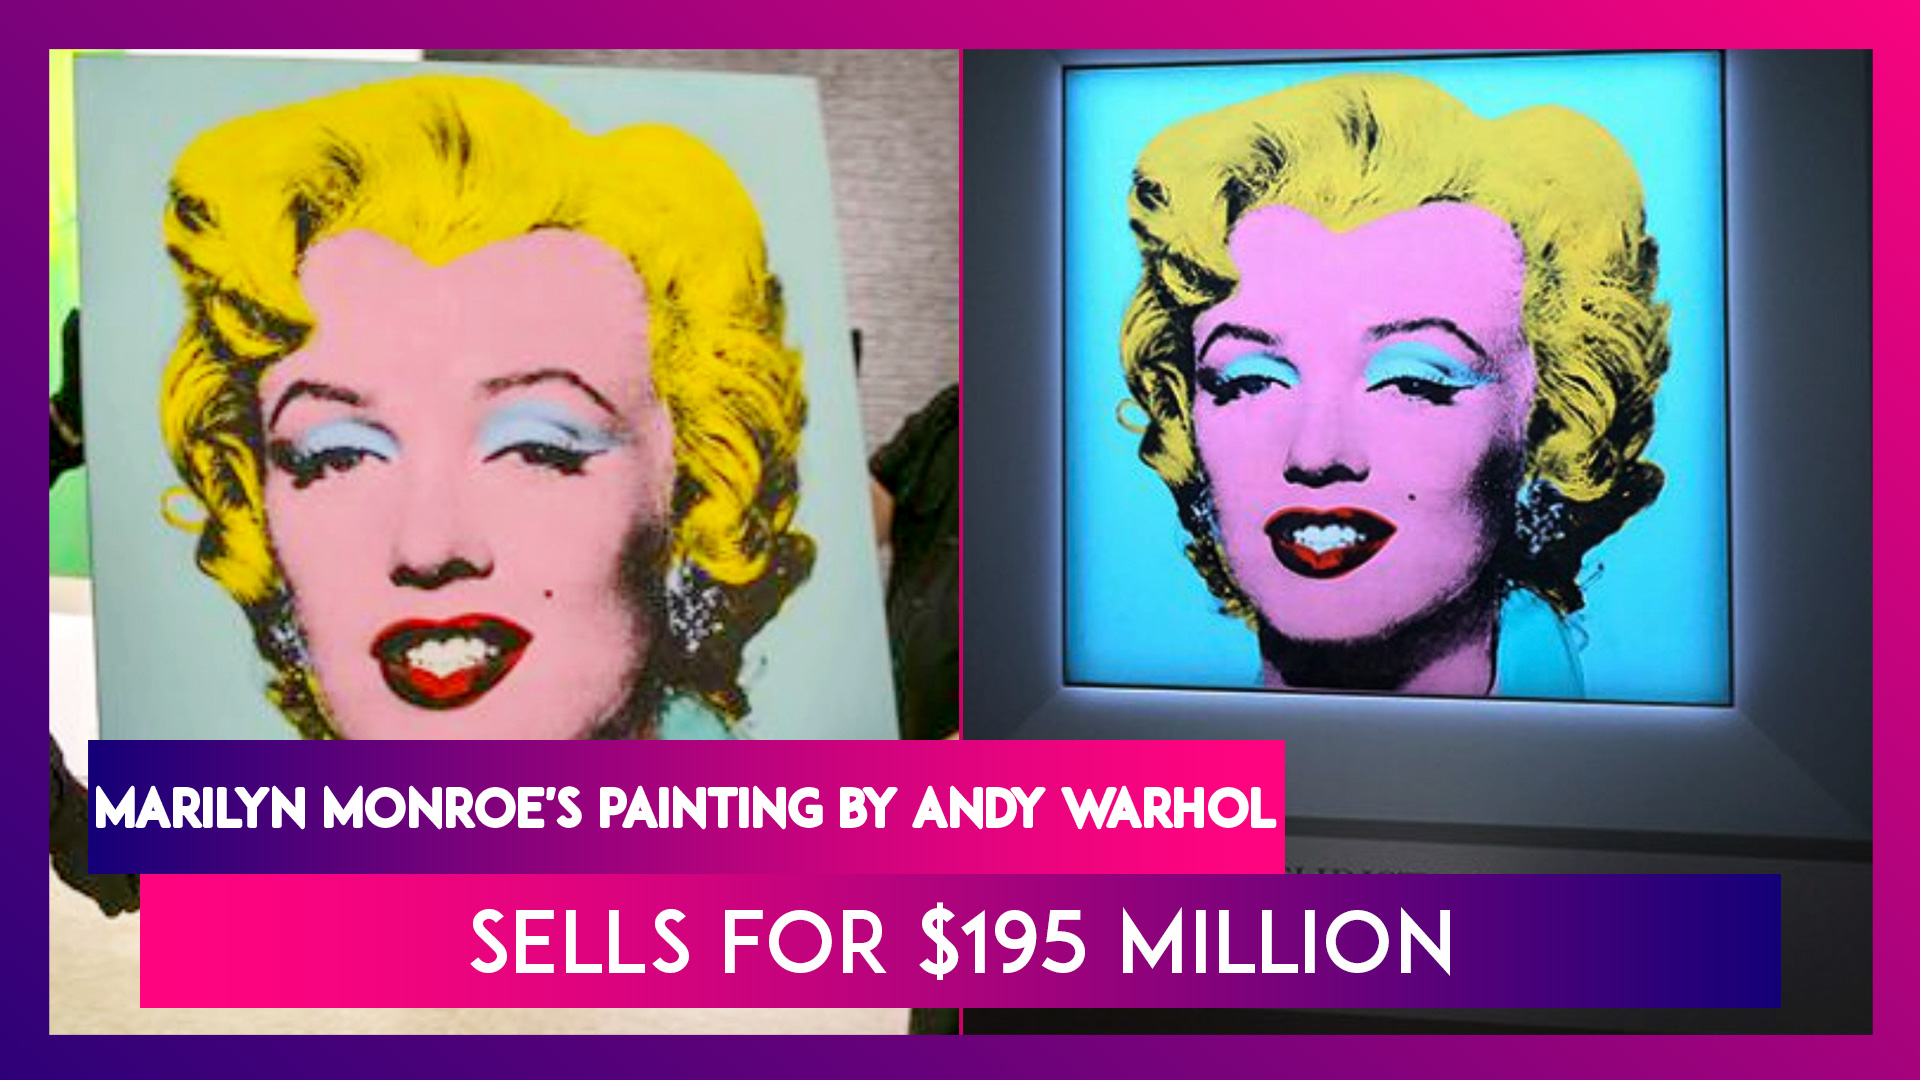 Why Did Warhol Paint Marilyn Monroe?